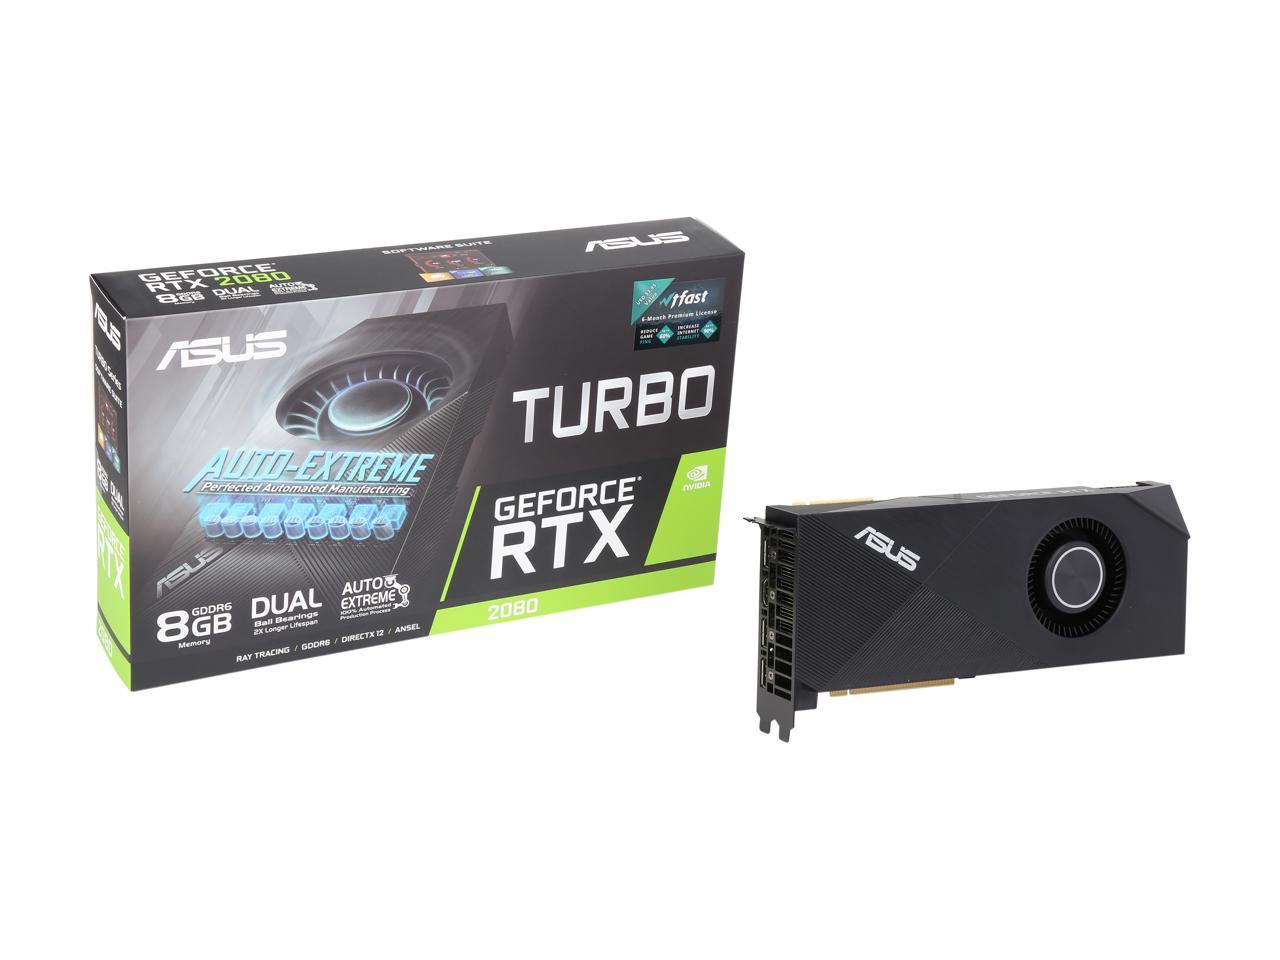 ASUS Turbo GeForce RTX 2080 Video Card TURBO-RTX2080-8G-EVO - Newegg.com